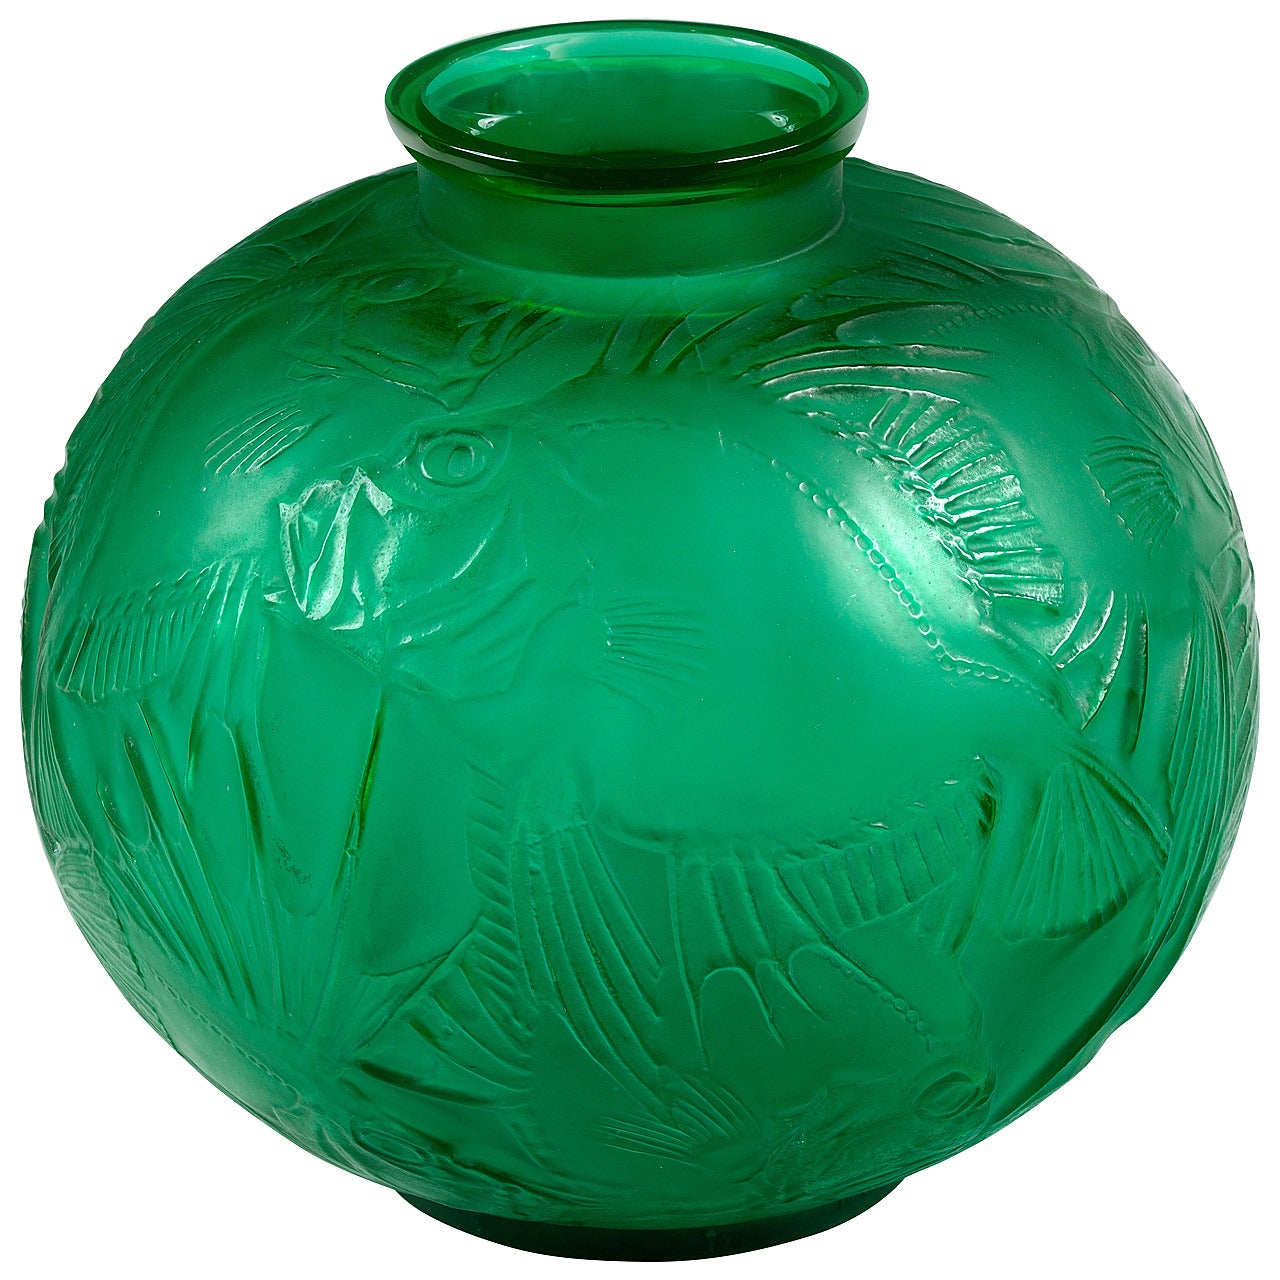 Lalique, Emerald Green Poissons Vase